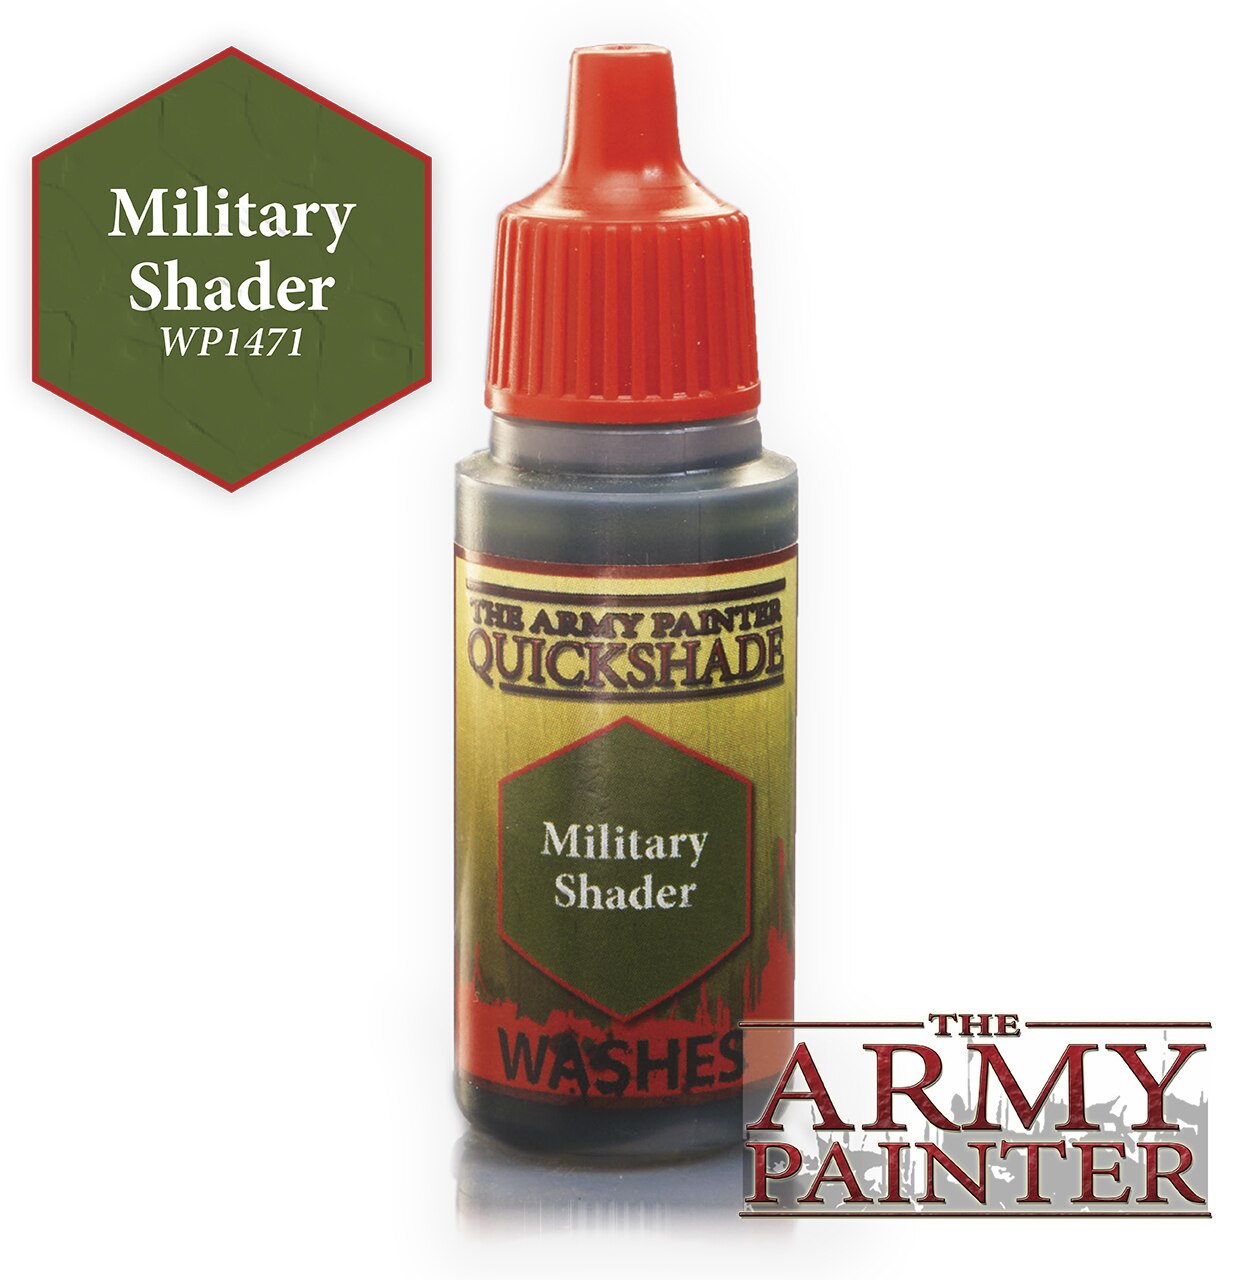 Army Painter Quickshade - Military Shader